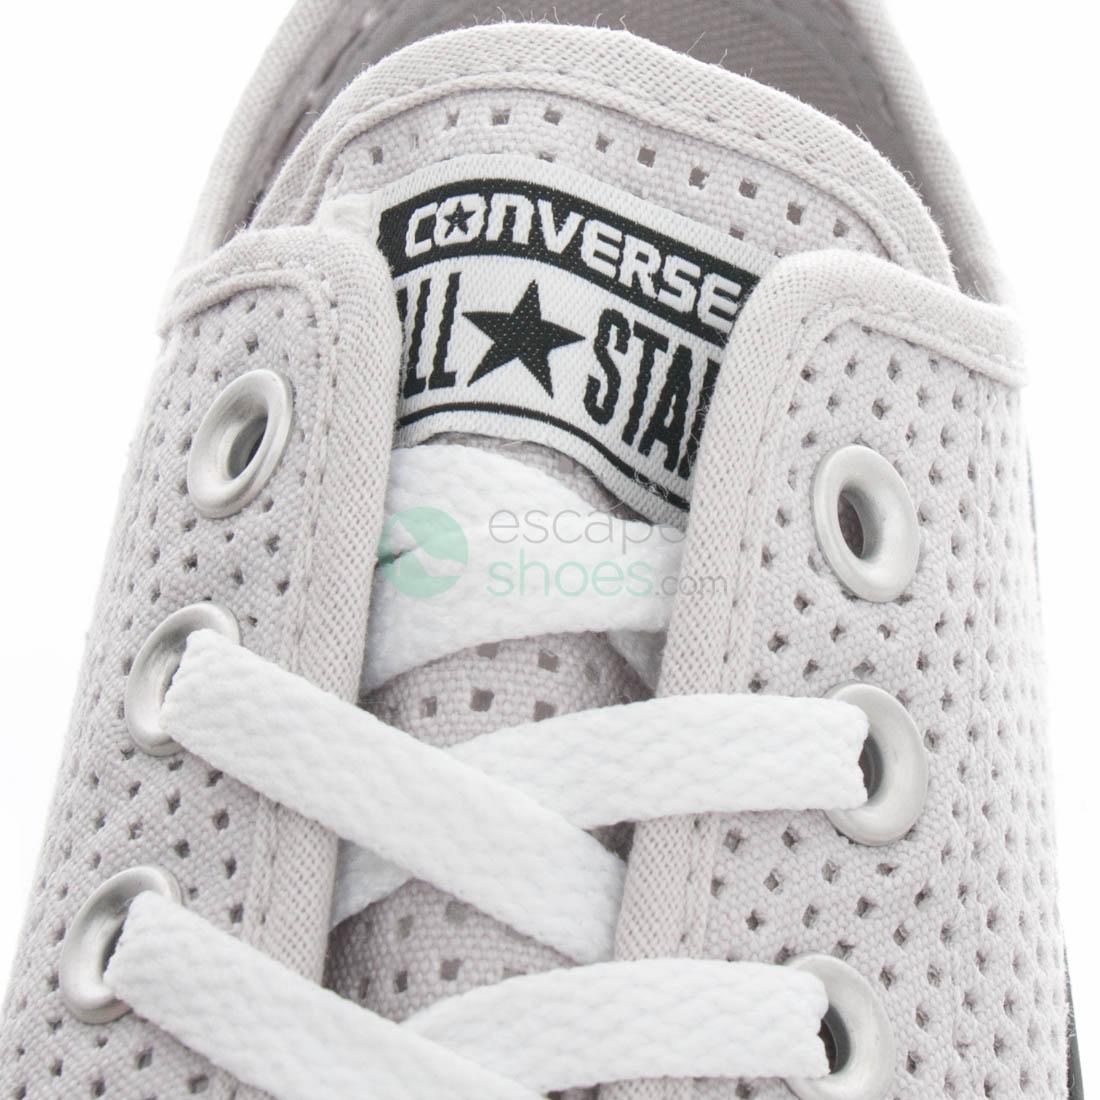 eficientemente Asombrosamente Romper Sneakers CONVERSE Chuck Taylor All Star 551624C Mouse White Black